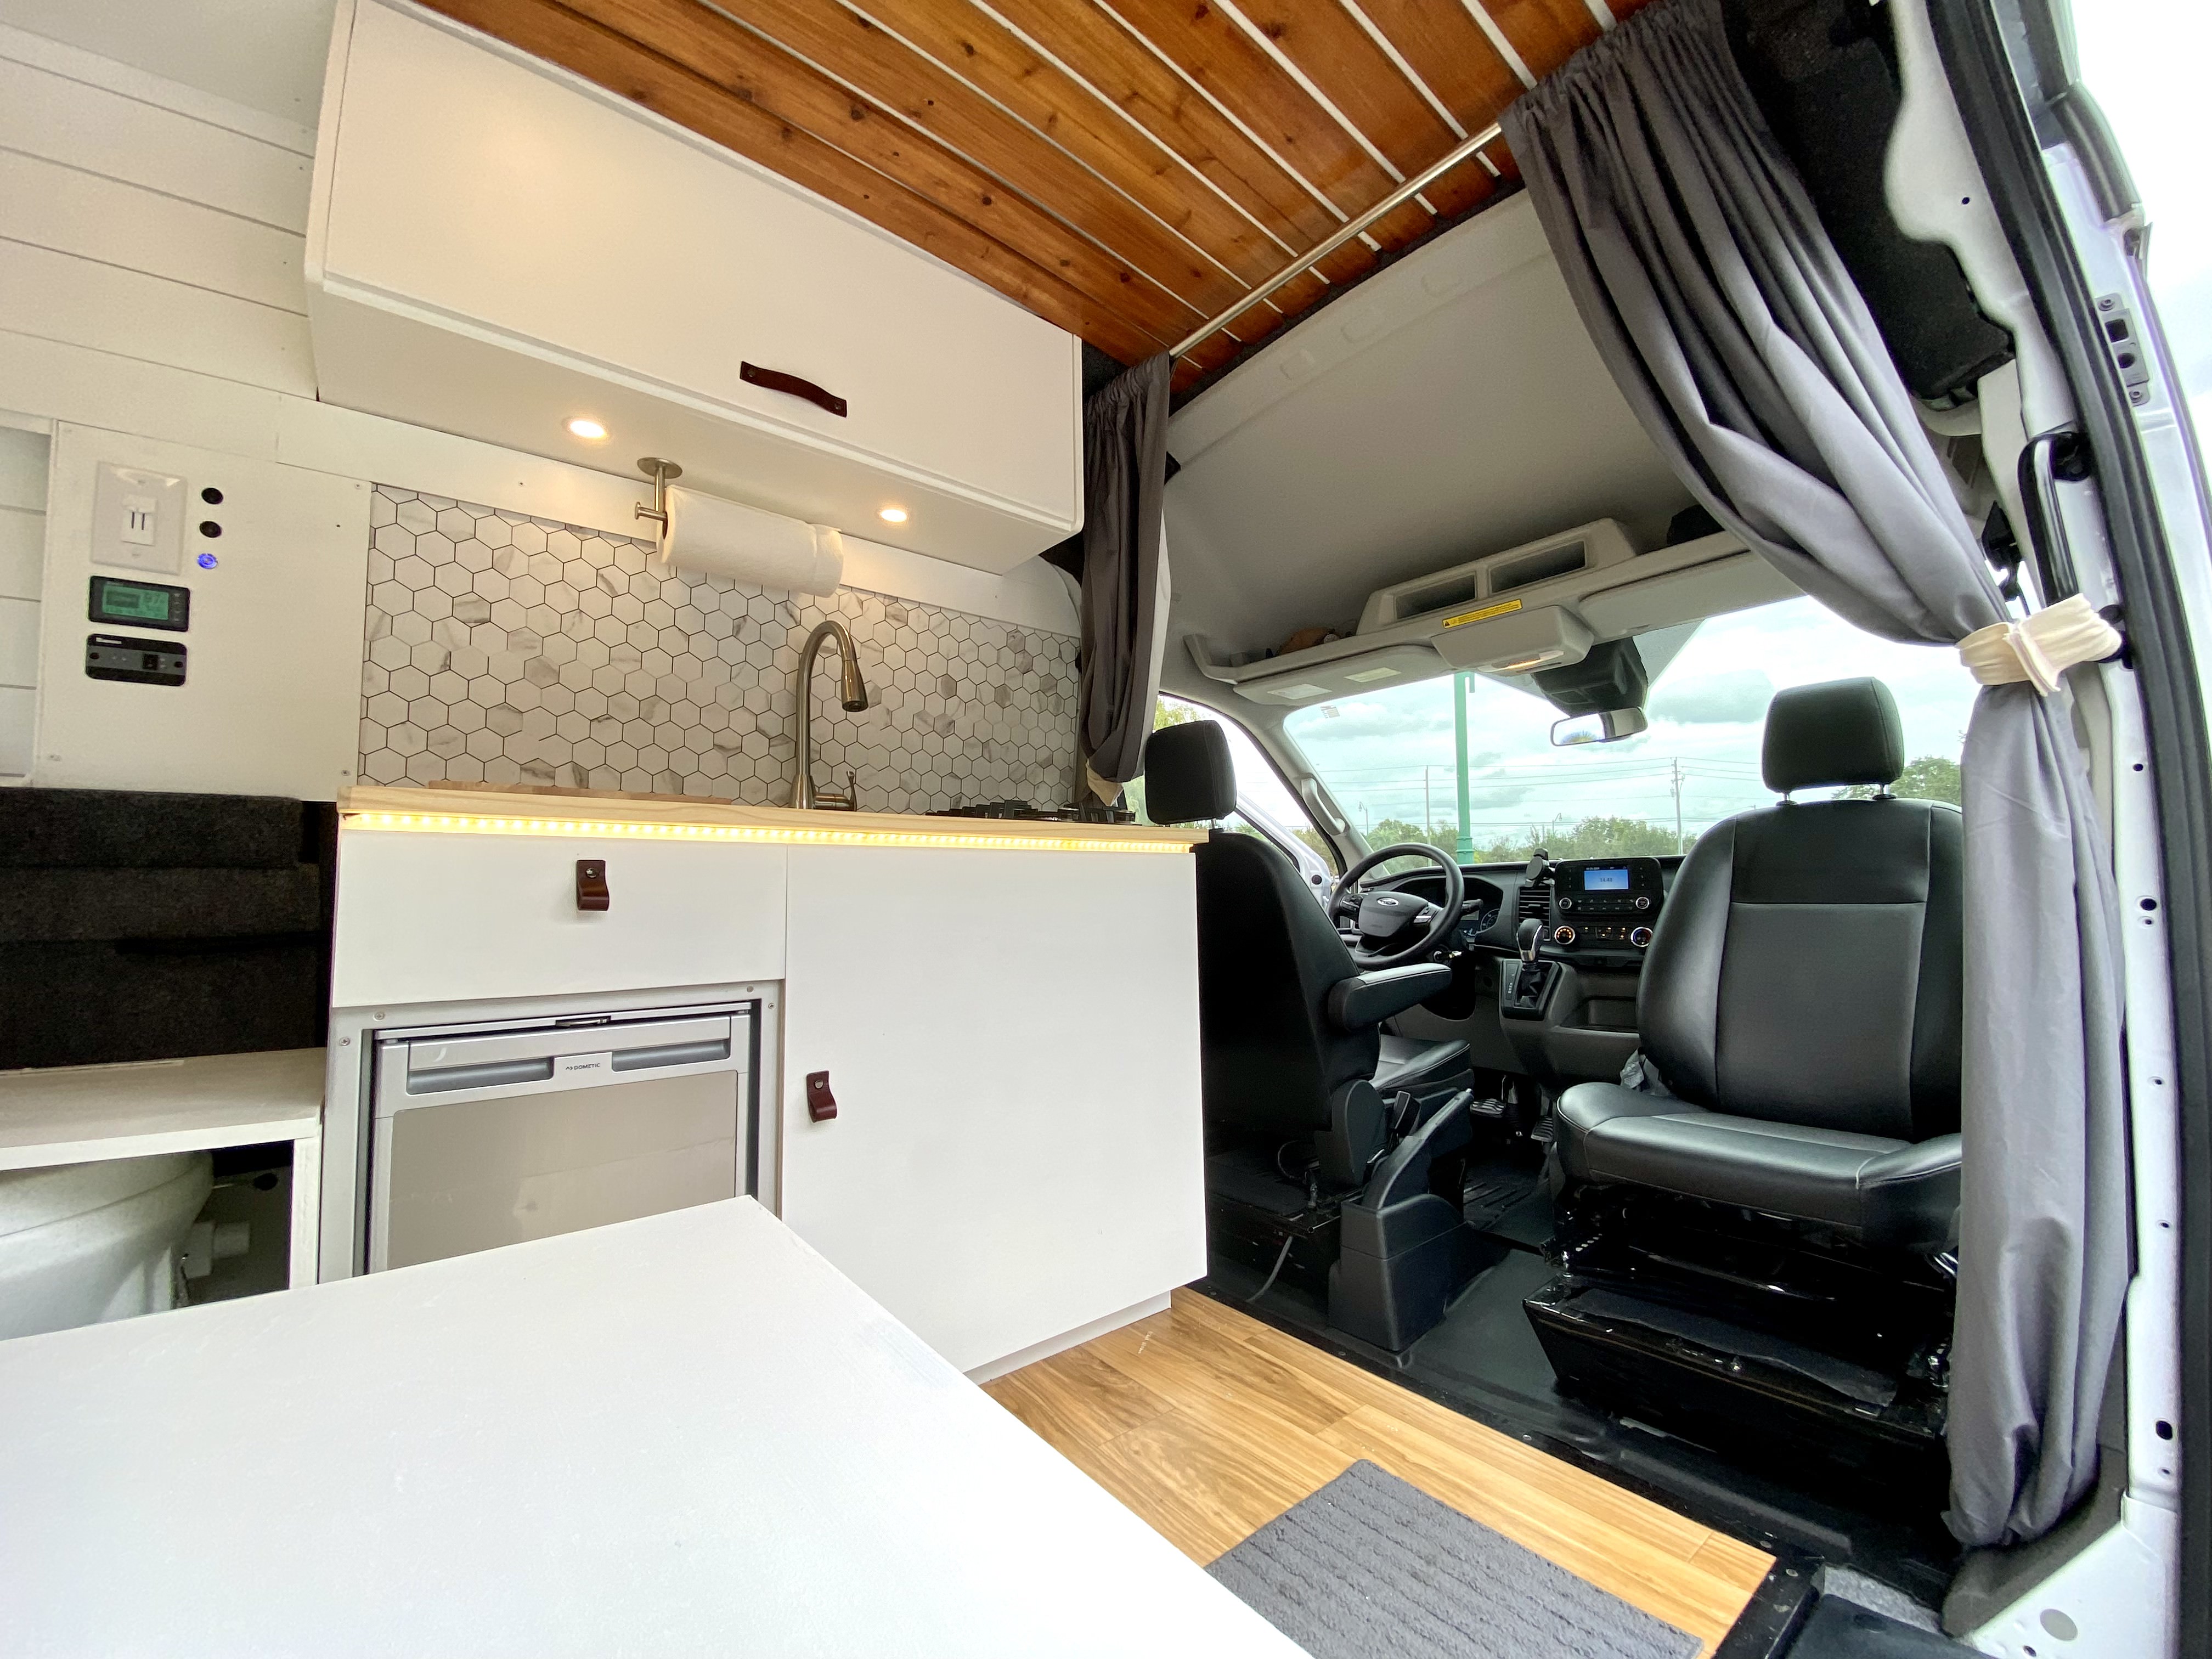 2020 Ford Transit Camper Van For Sale in Sarasota, Florida - Van Viewer